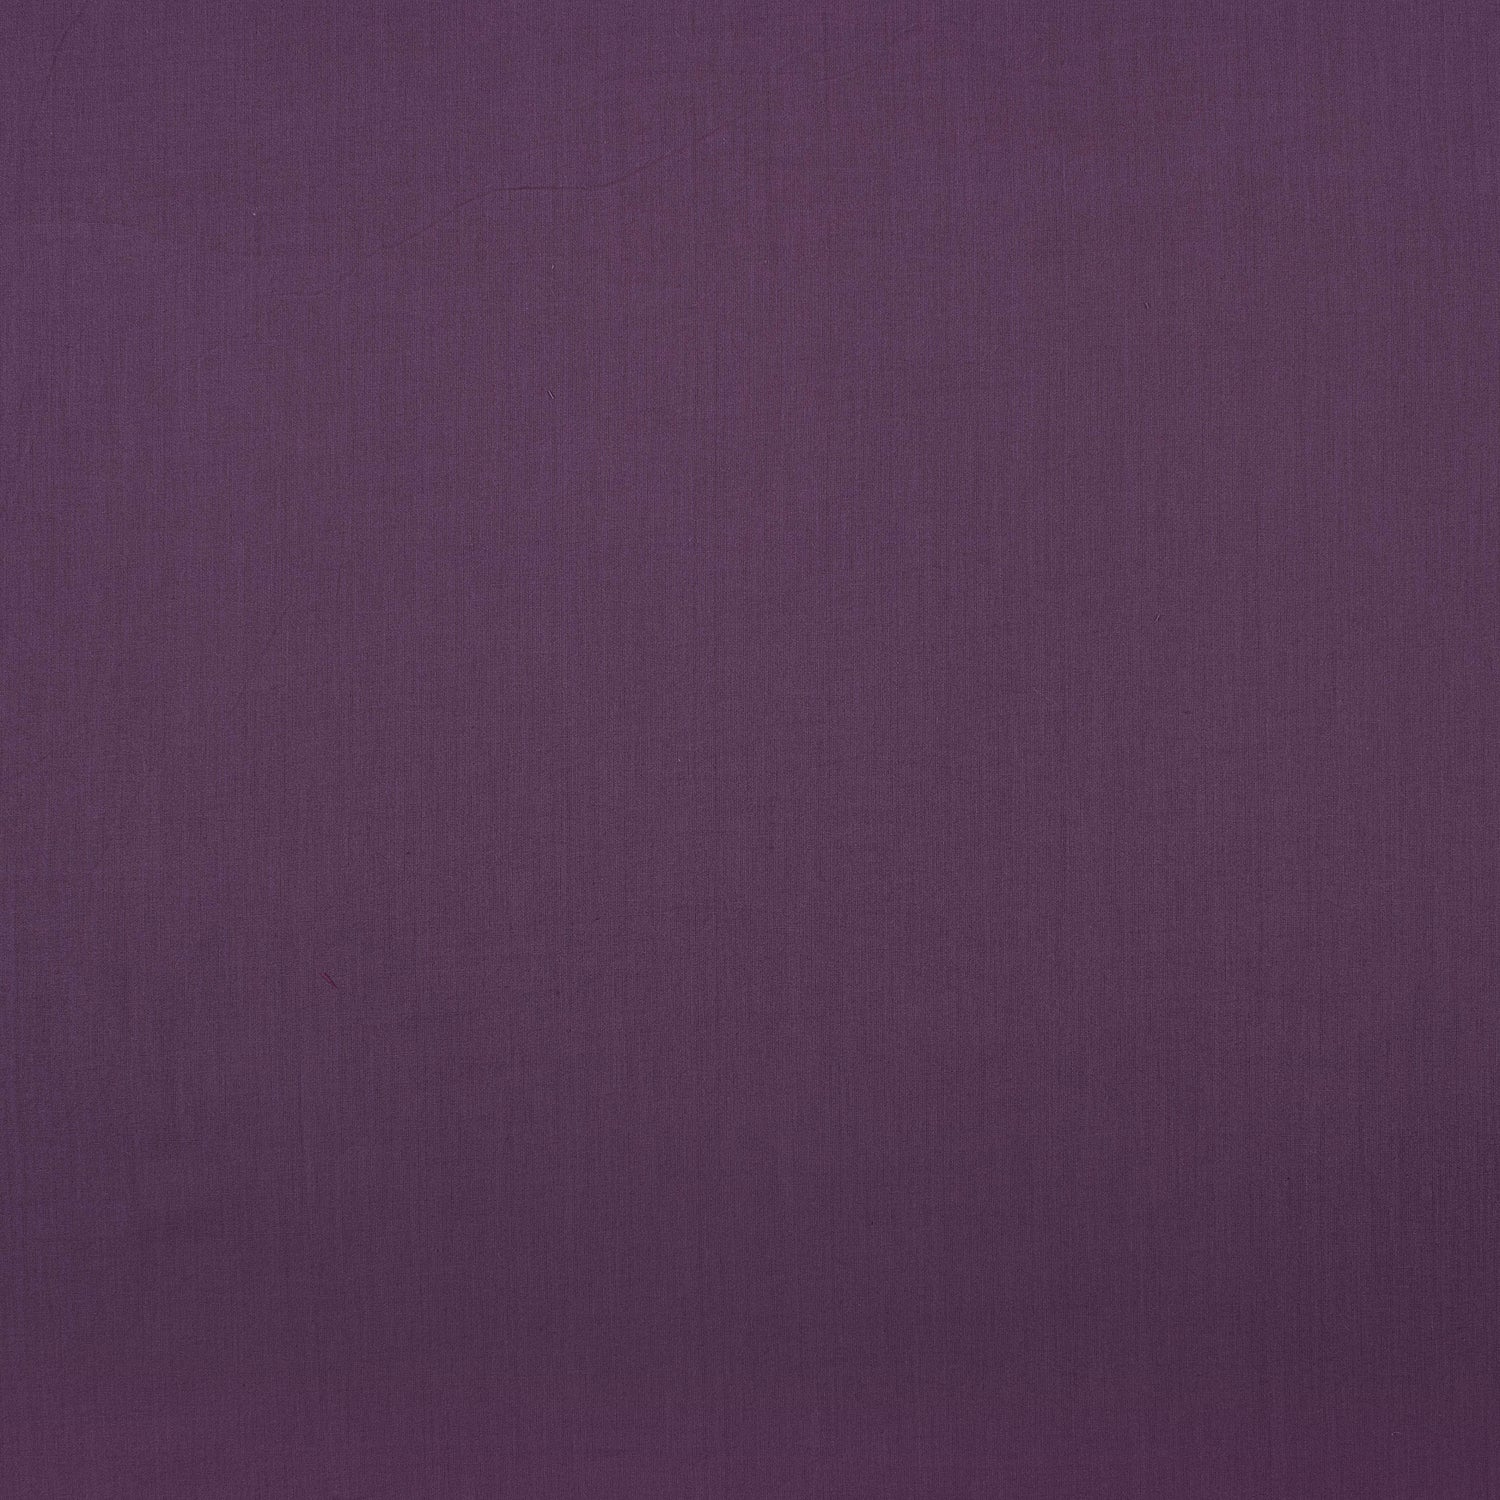 Premium Fabric in Purple Solid Soft Cotton